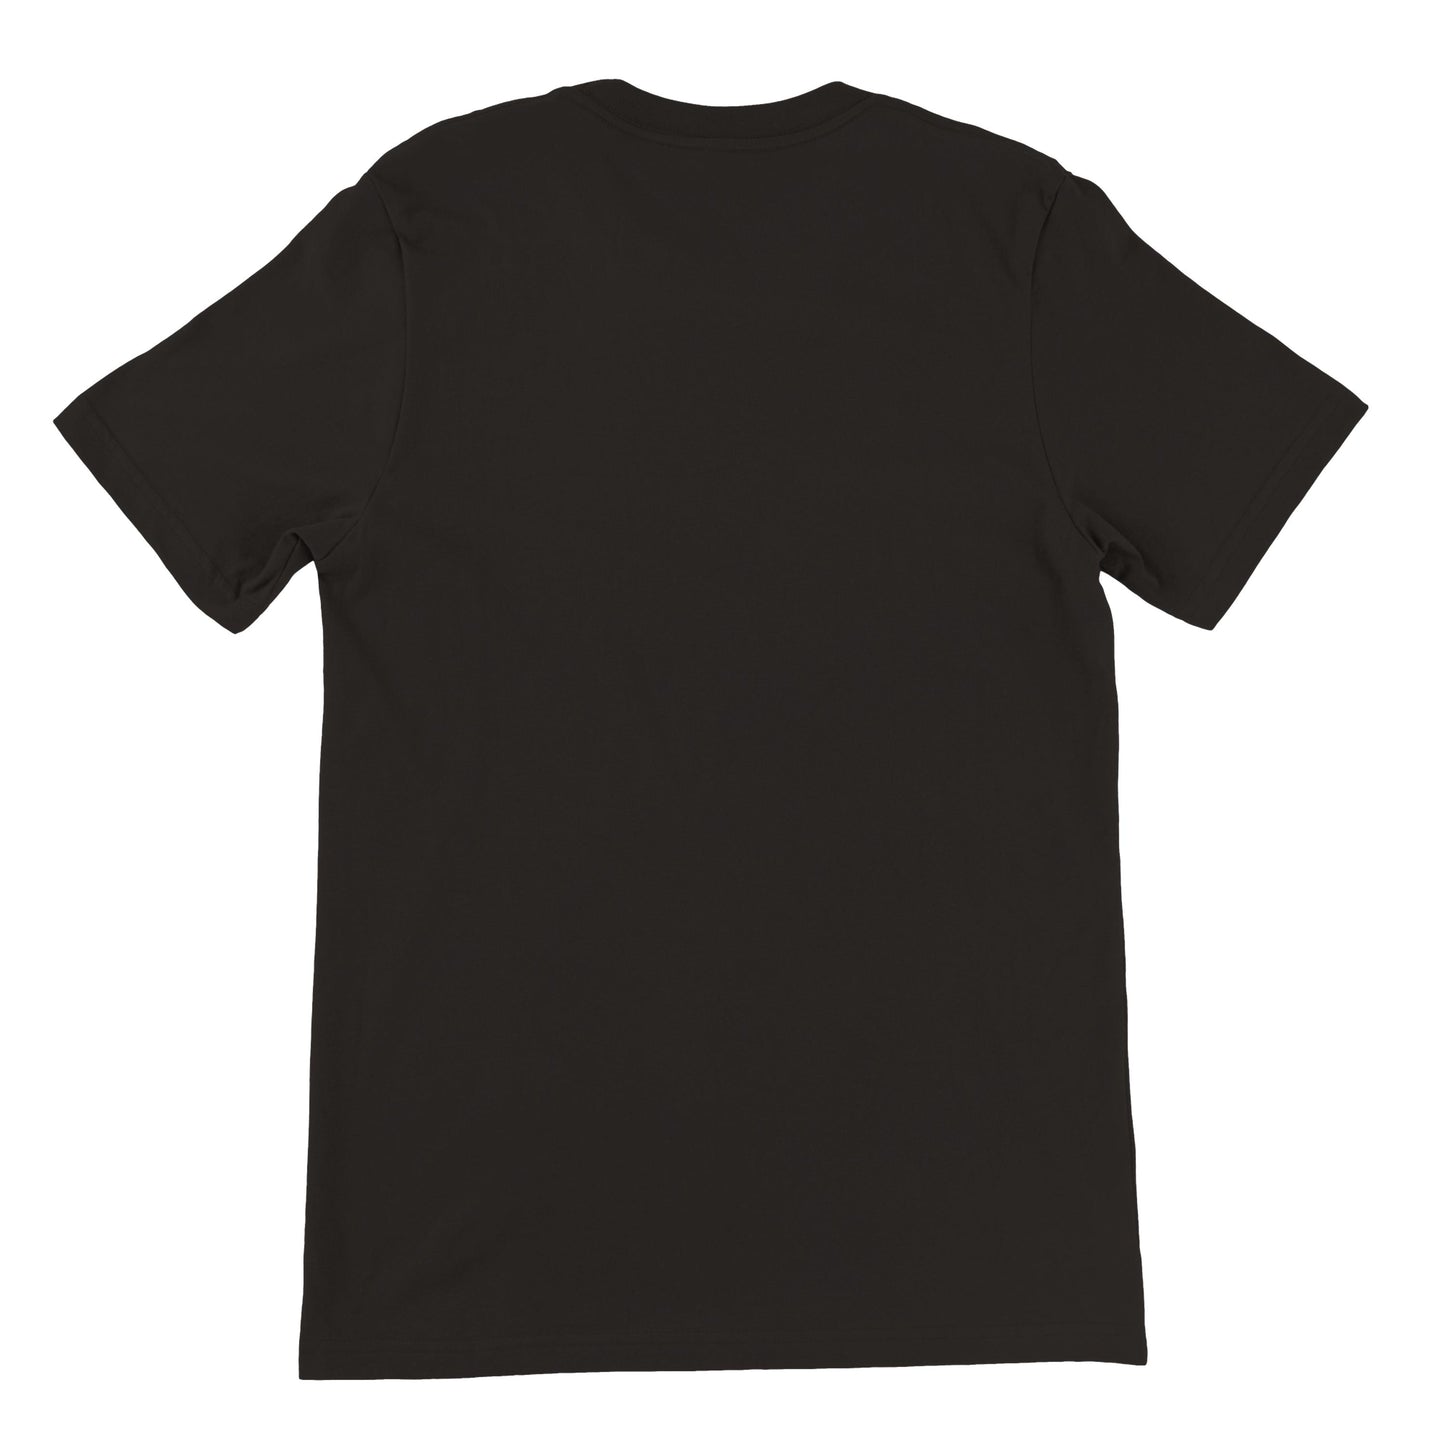 Daily Drop Crewneck Black Premium T-shirt